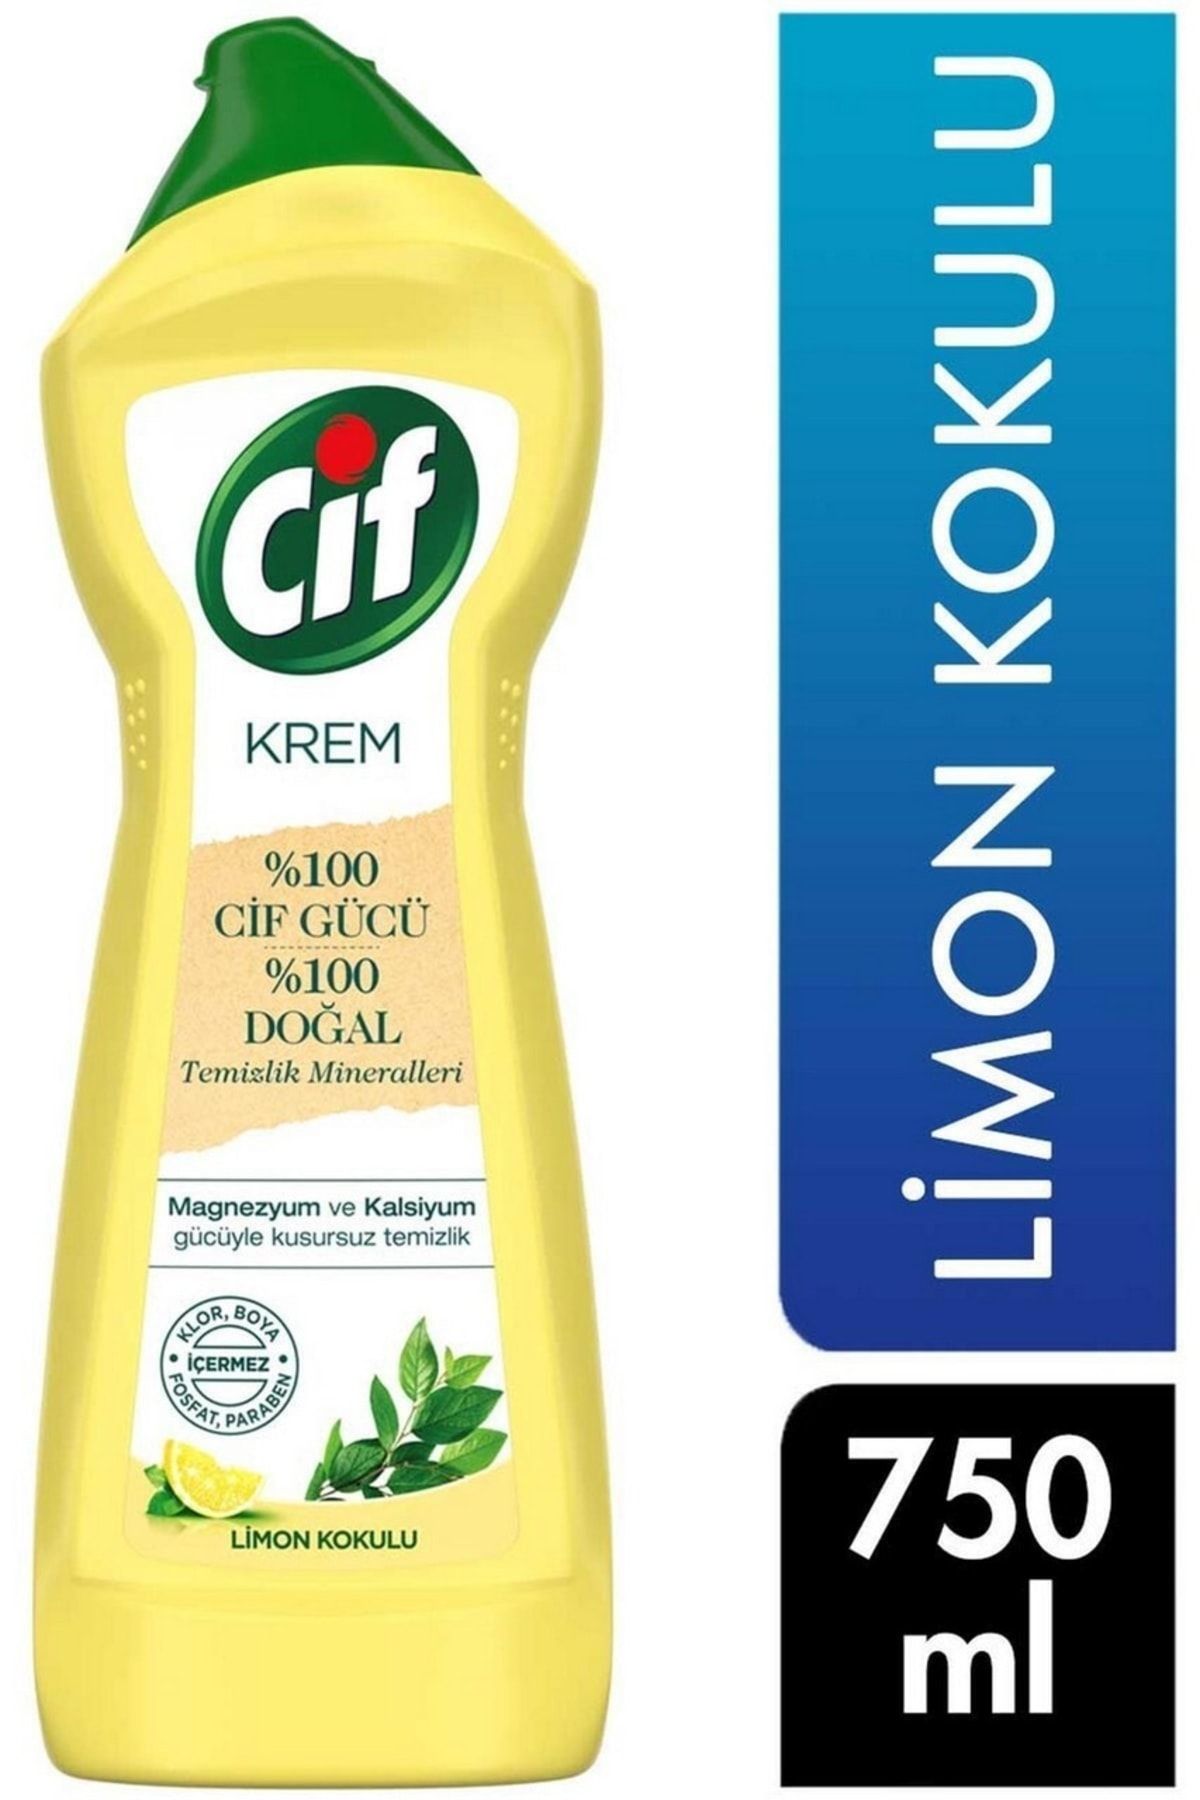 Cif Krem Limon Kokulu 750gr (1x16)